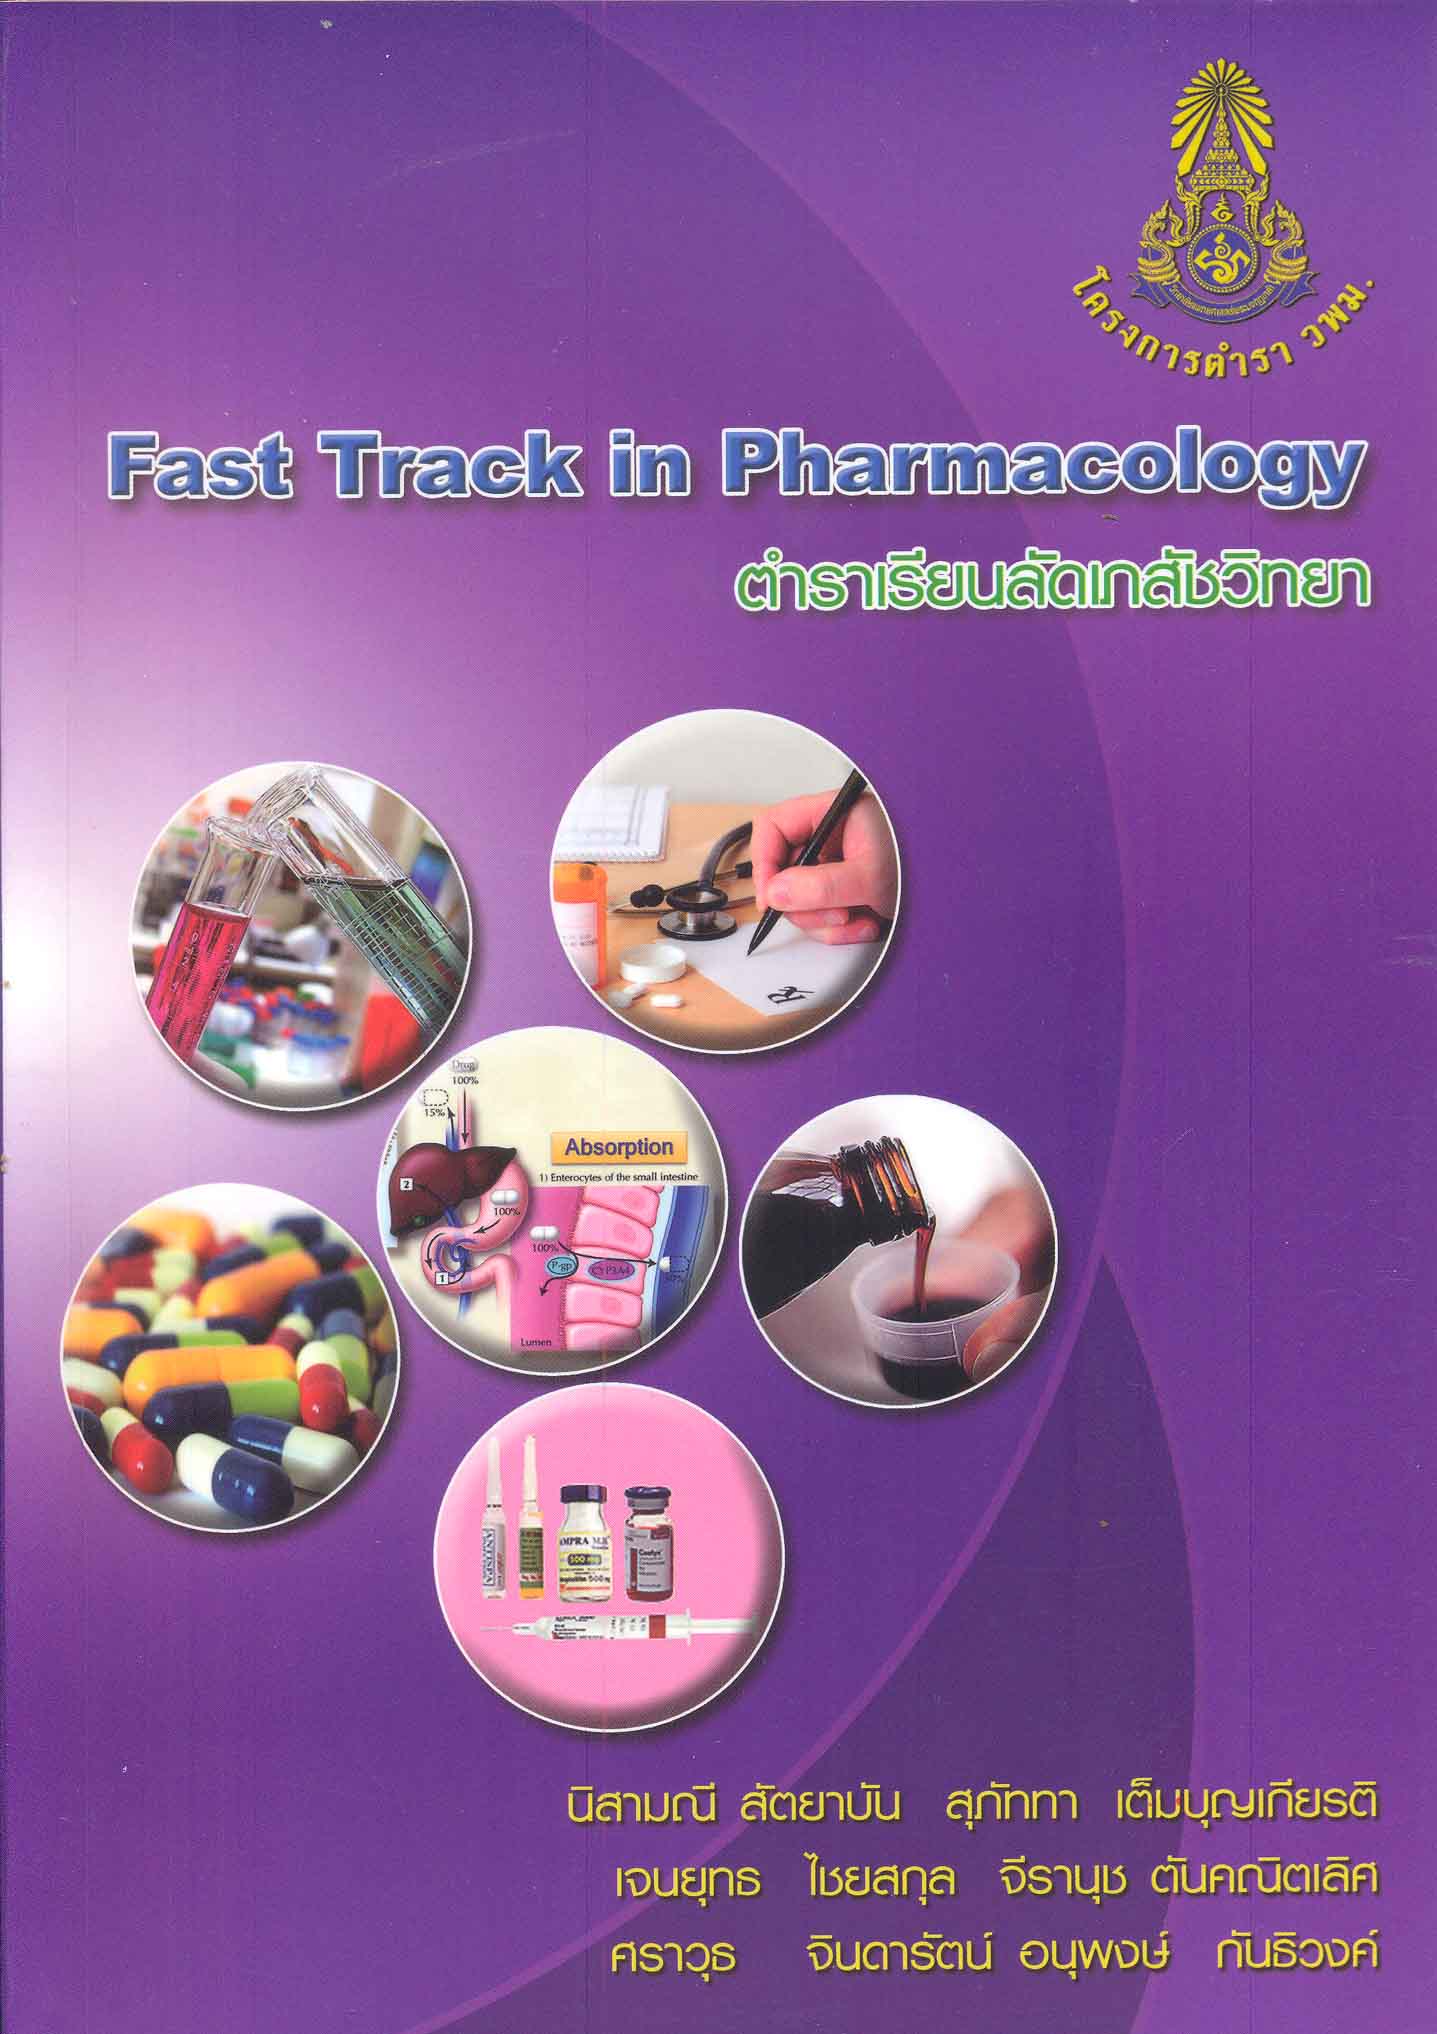 Fast track in pharmacology : ตำราเรียนลัดเภสัชวิทยา